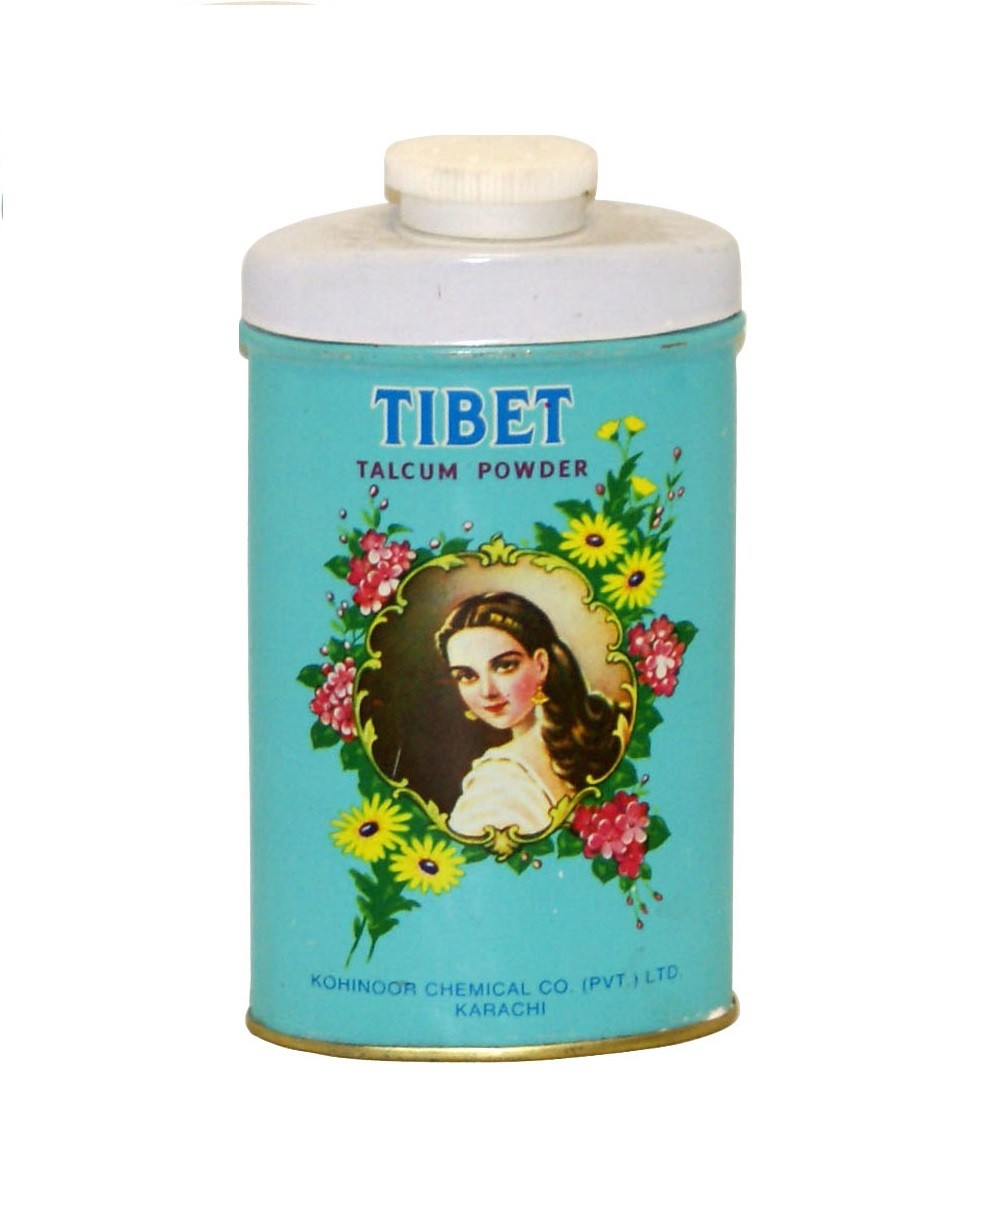 Tibet Talcum Powder